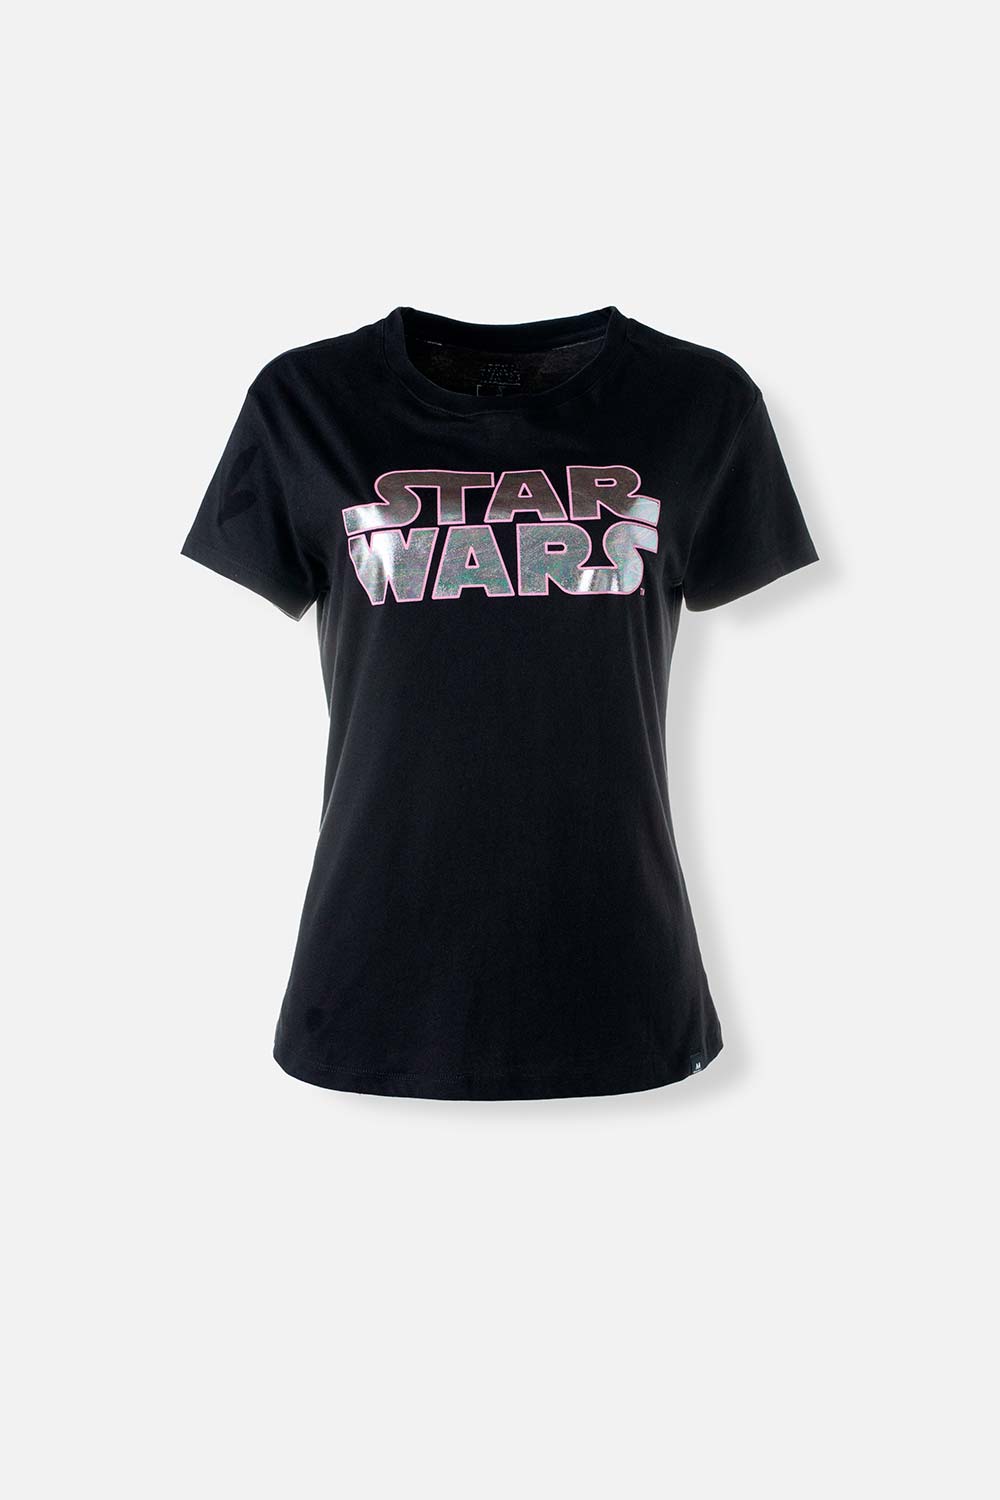 Camiseta de Star Wars manga corta negra para mujer XS-0